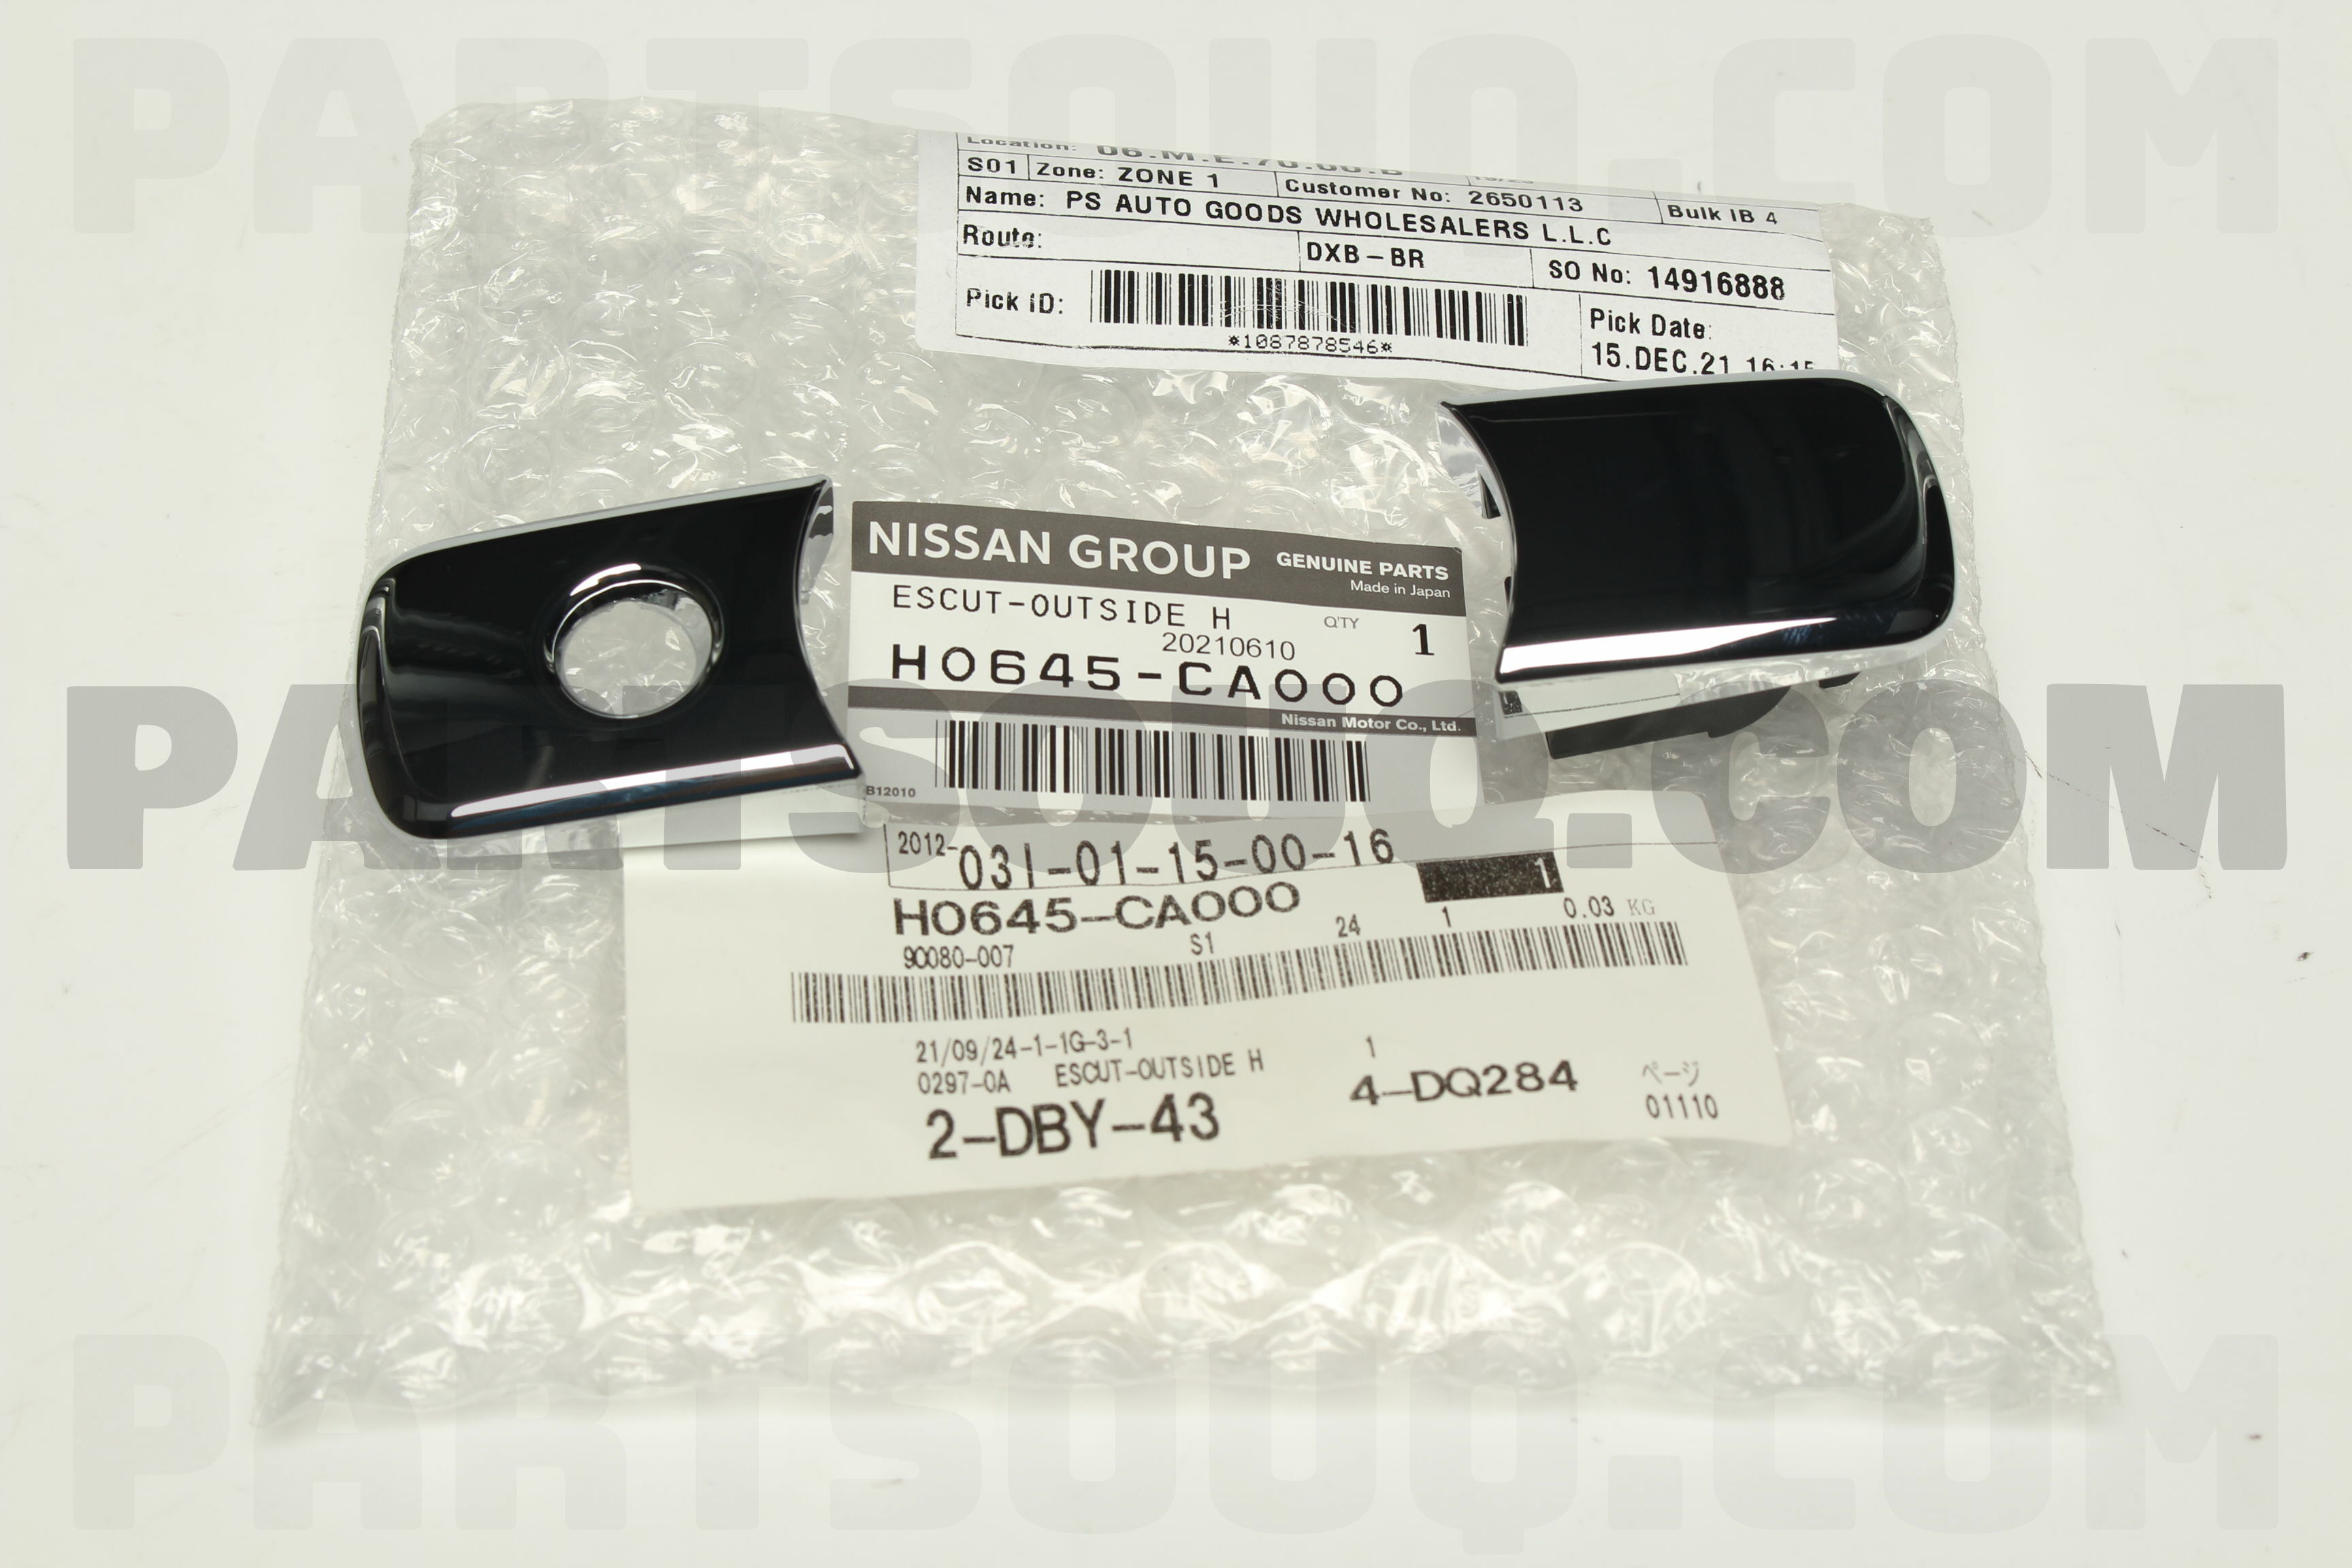 New Genuine OEM Part H0645-CA000 Nissan Escutcheonouts H0645CA000